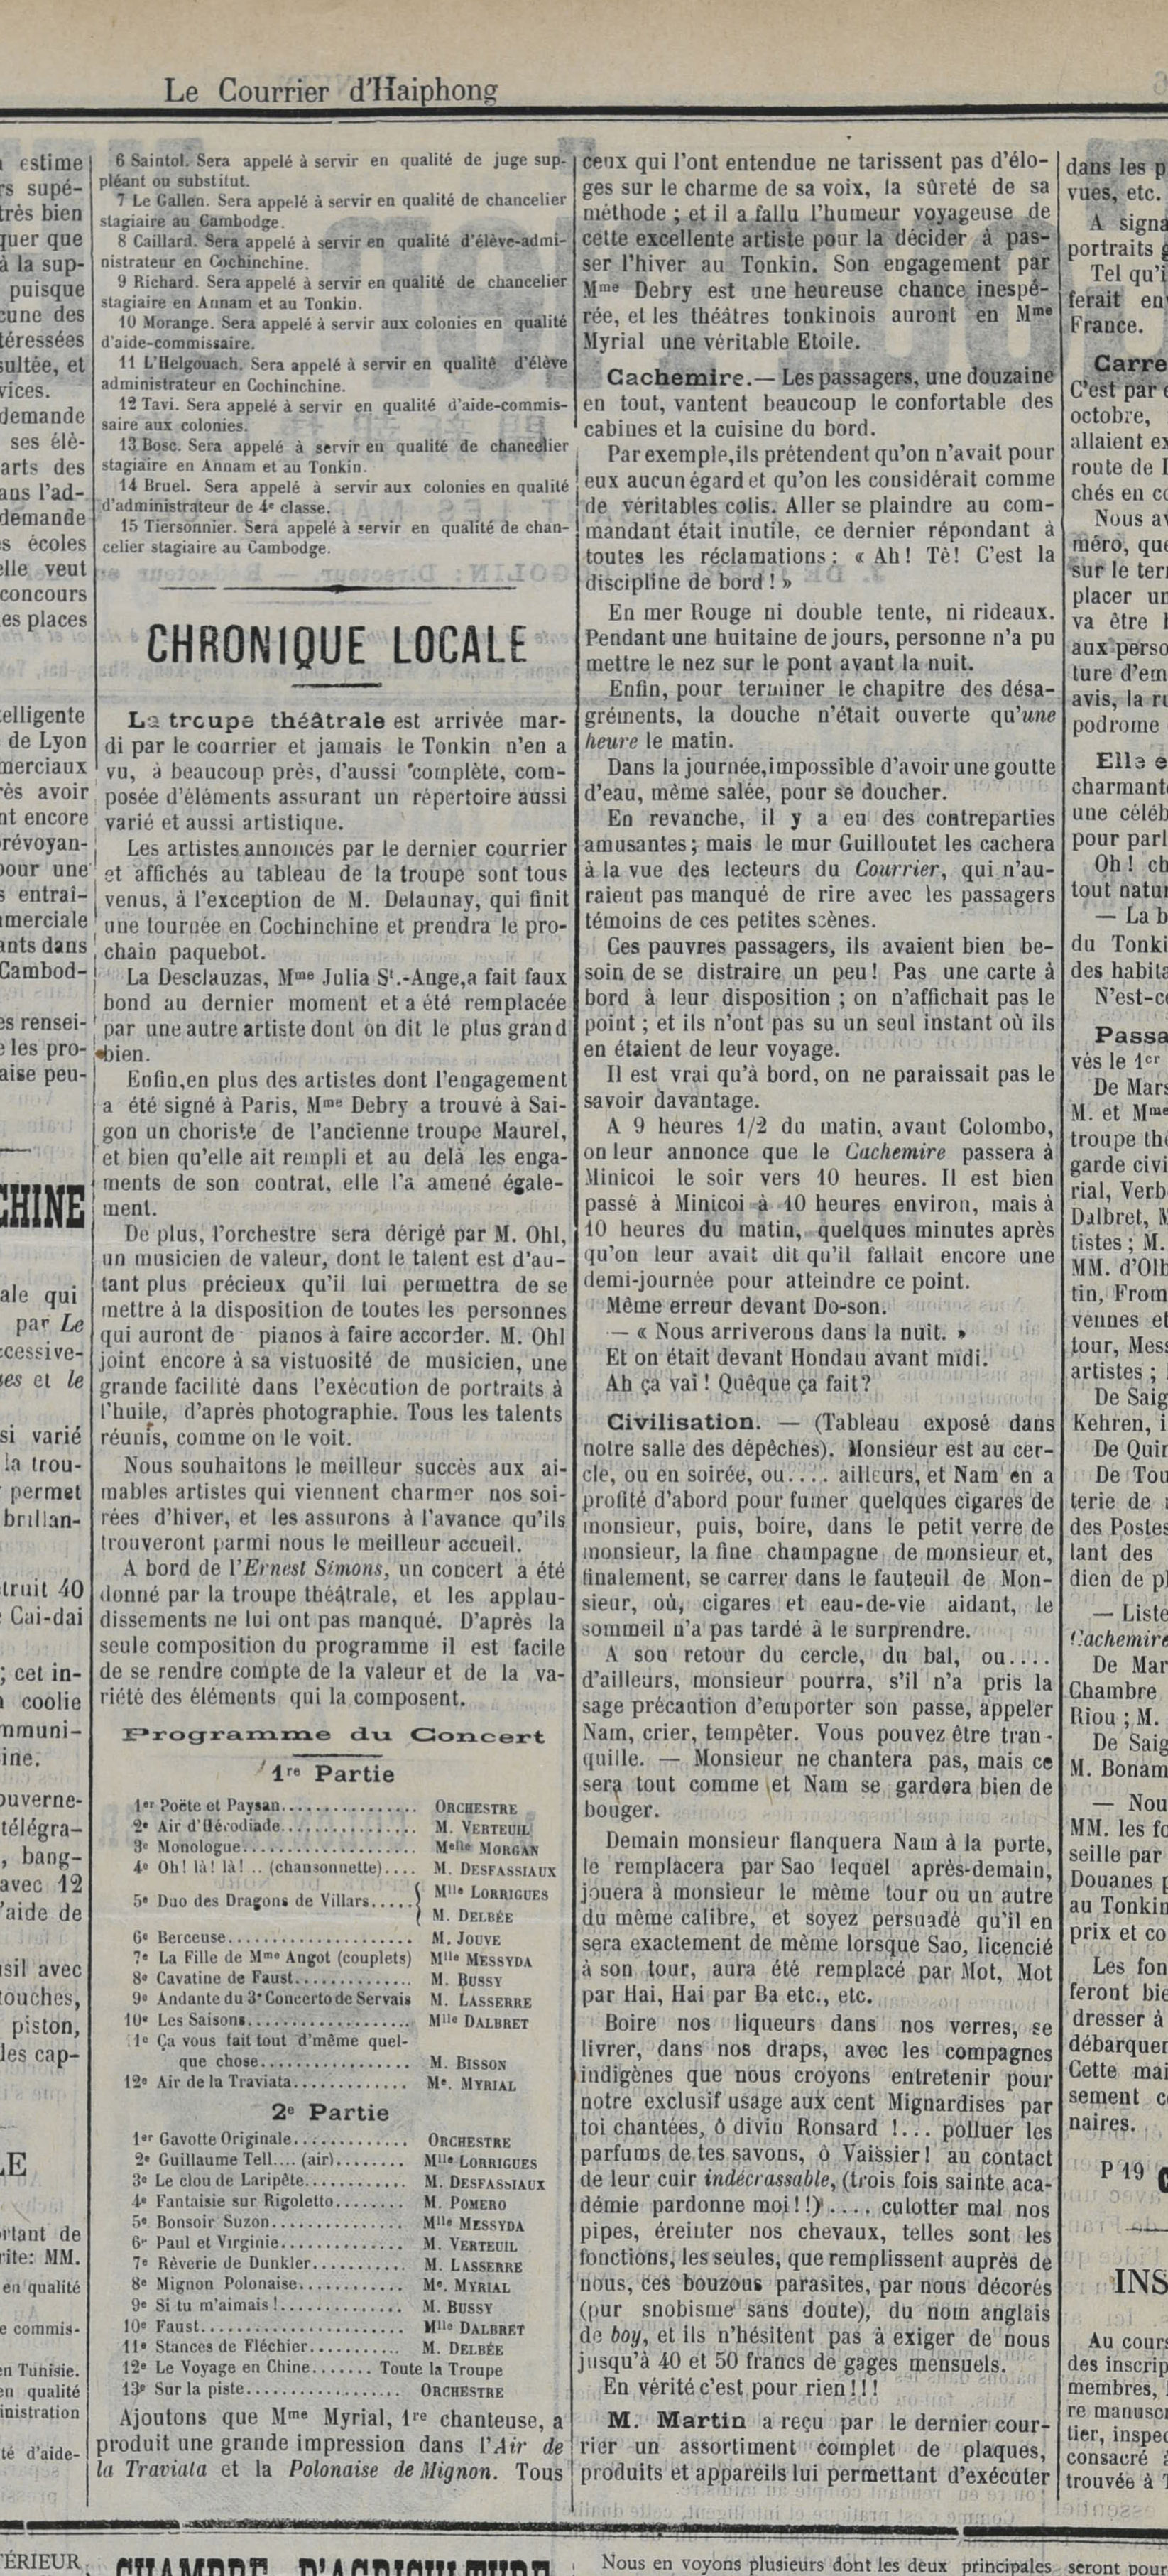 Chronique locale, 3 octobre 1895